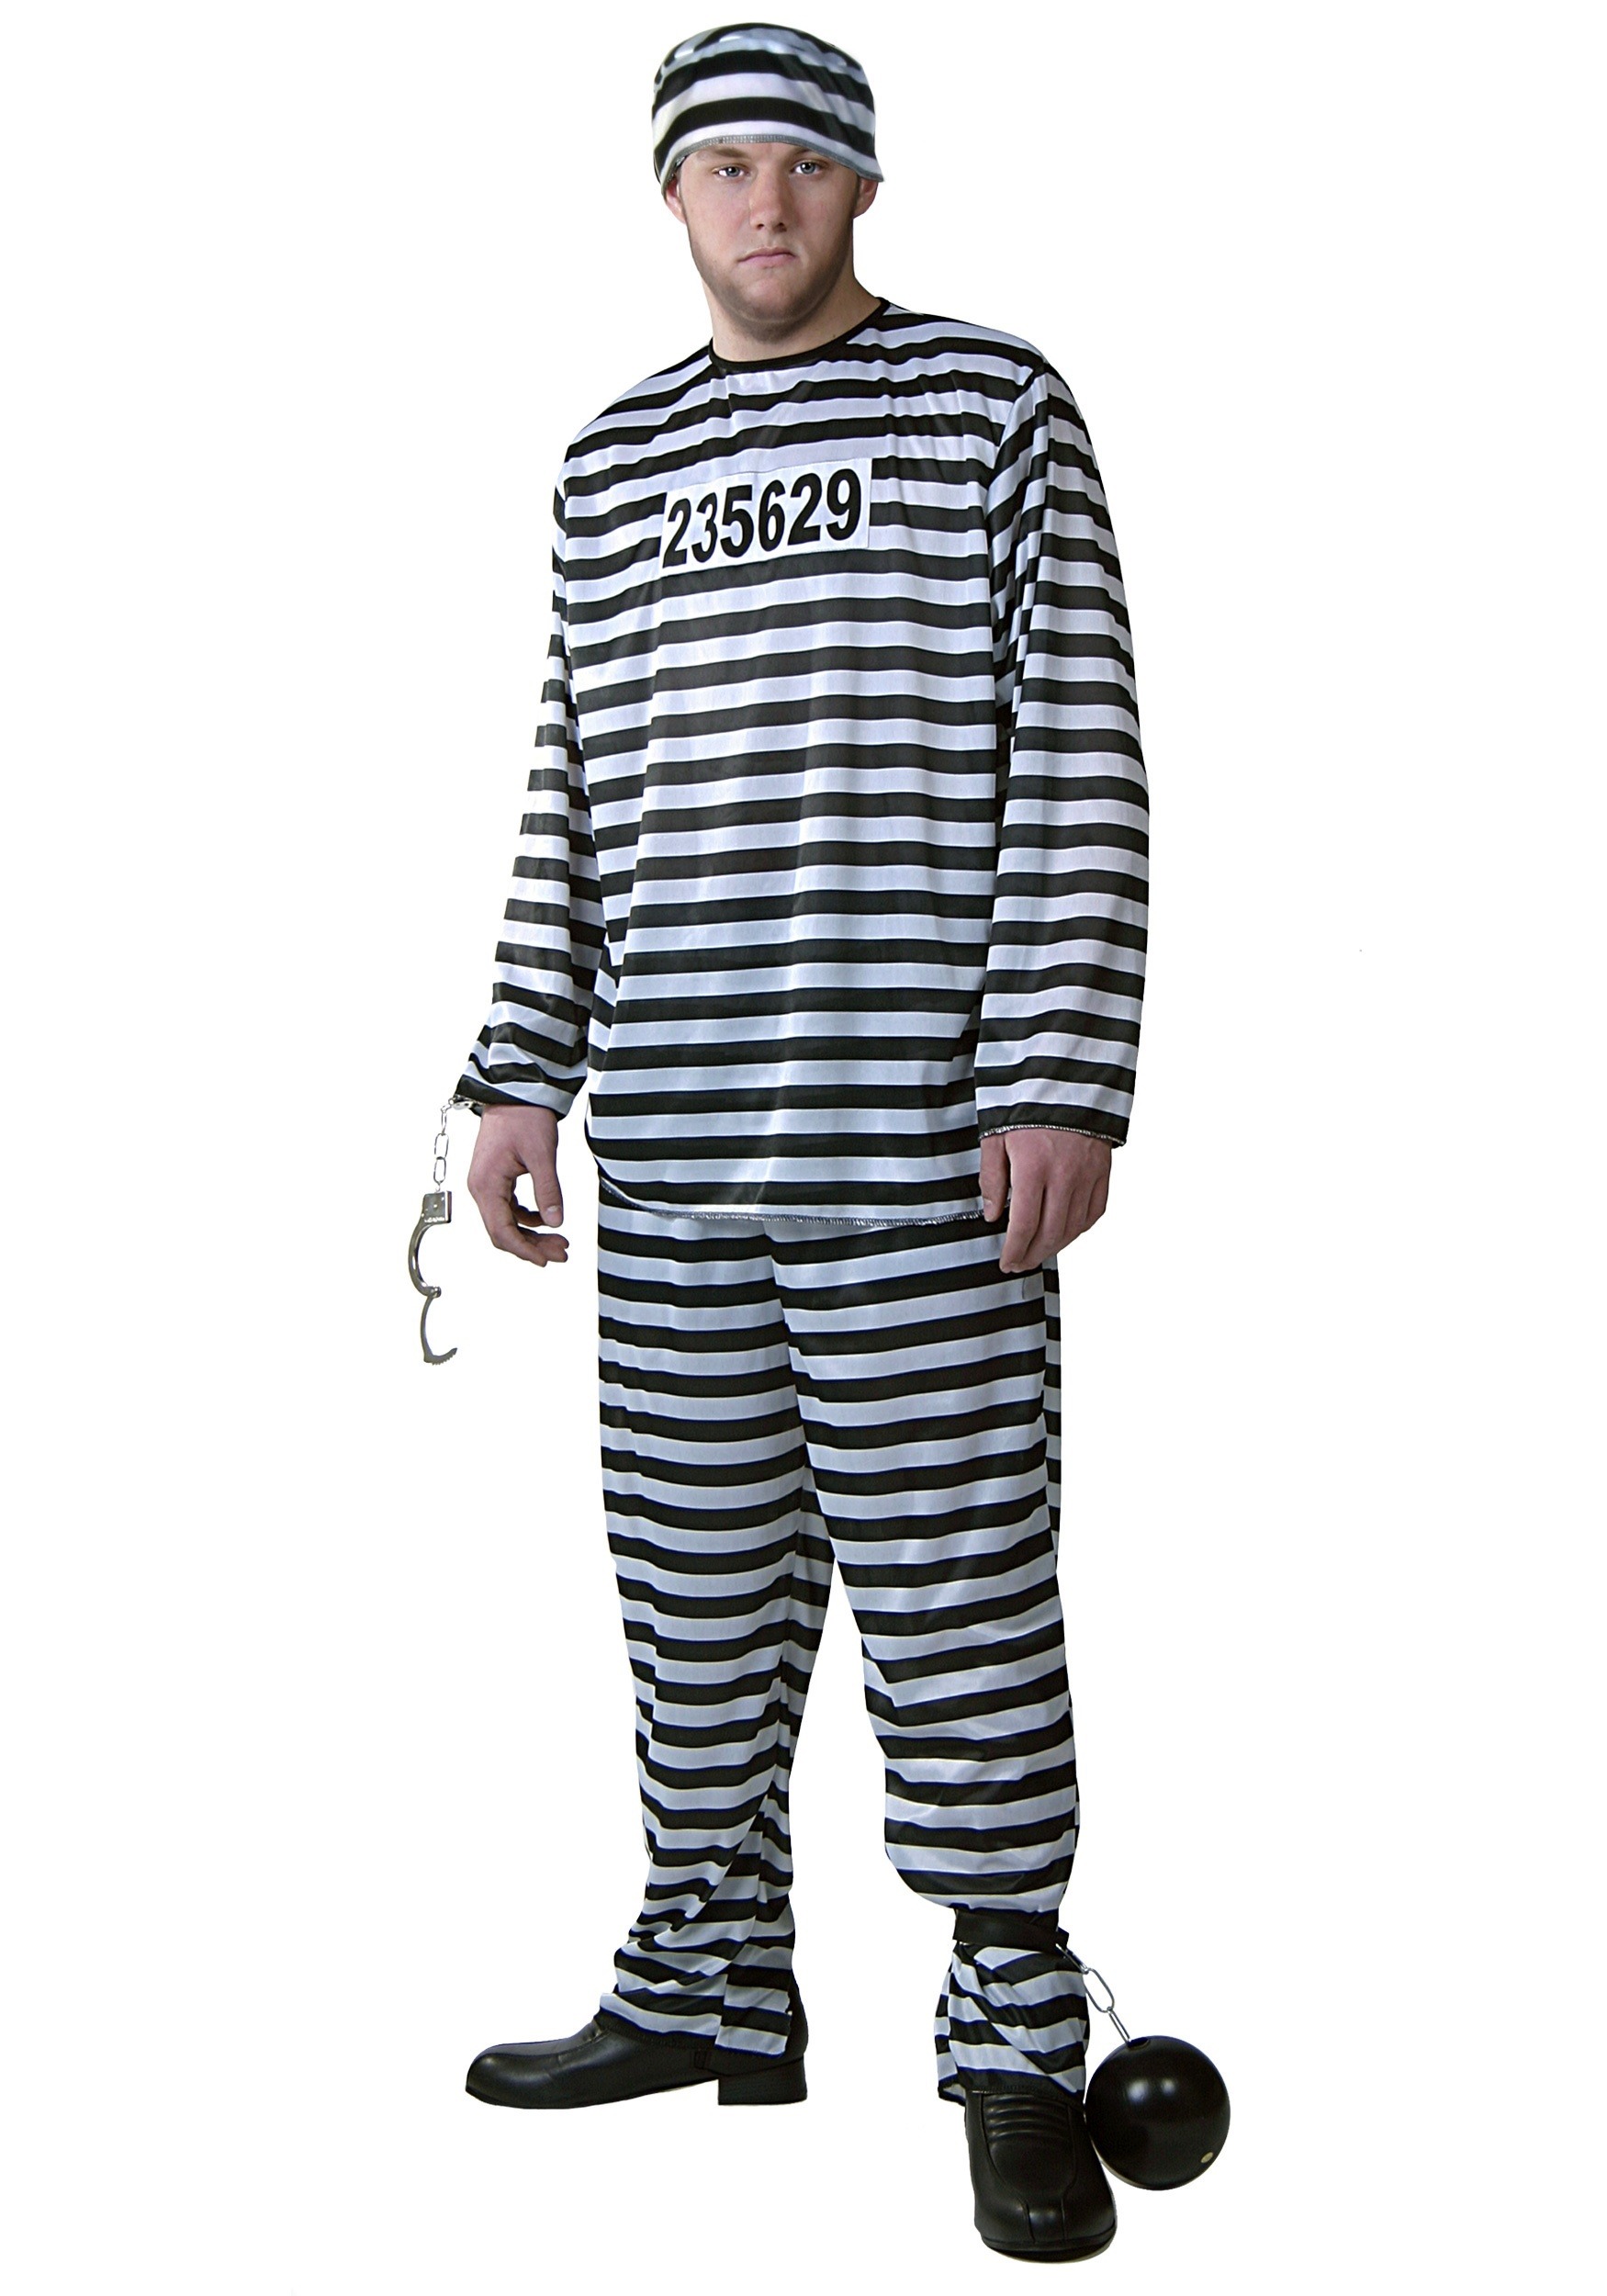 Photos - Fancy Dress FUN Costumes Prisoner Costume for Men Black FUN2034AD